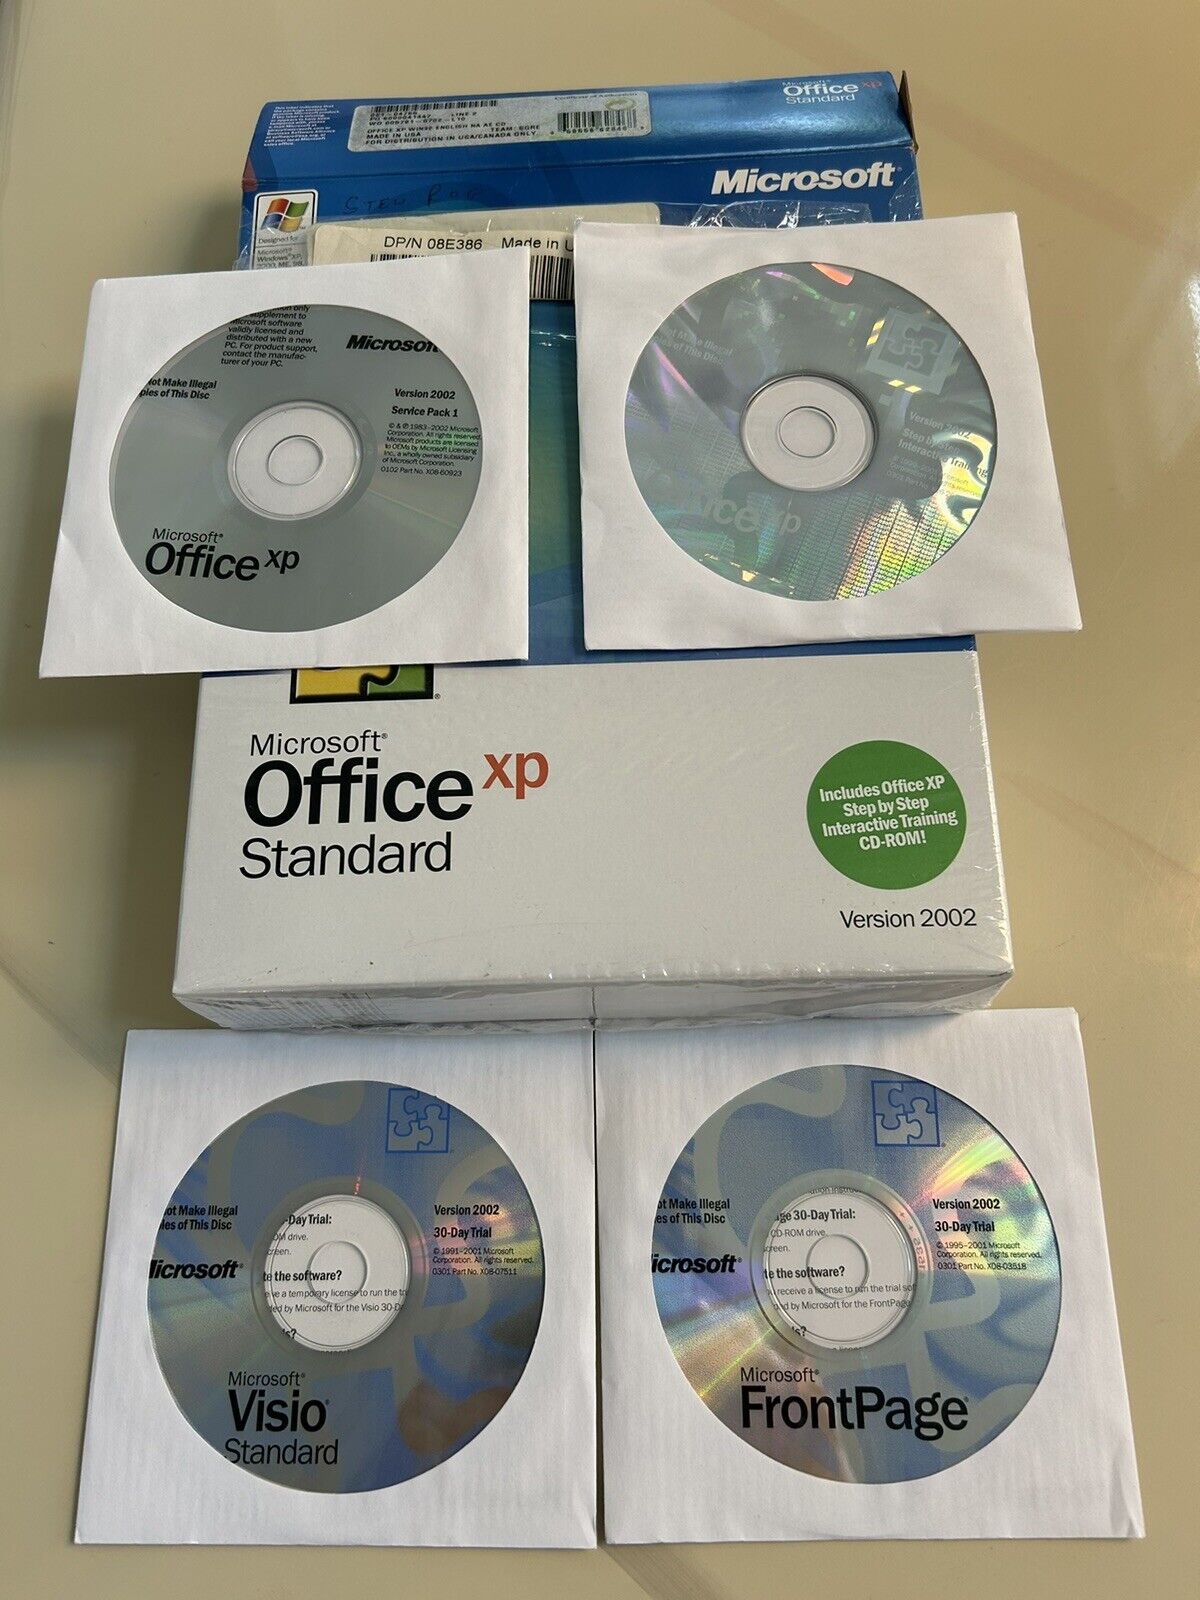 VINTAGE MICROSOFT OFFICE XP STANDARD 2002 ORIGINAL BOX, DISCS,  INSTRUCTION BOOK